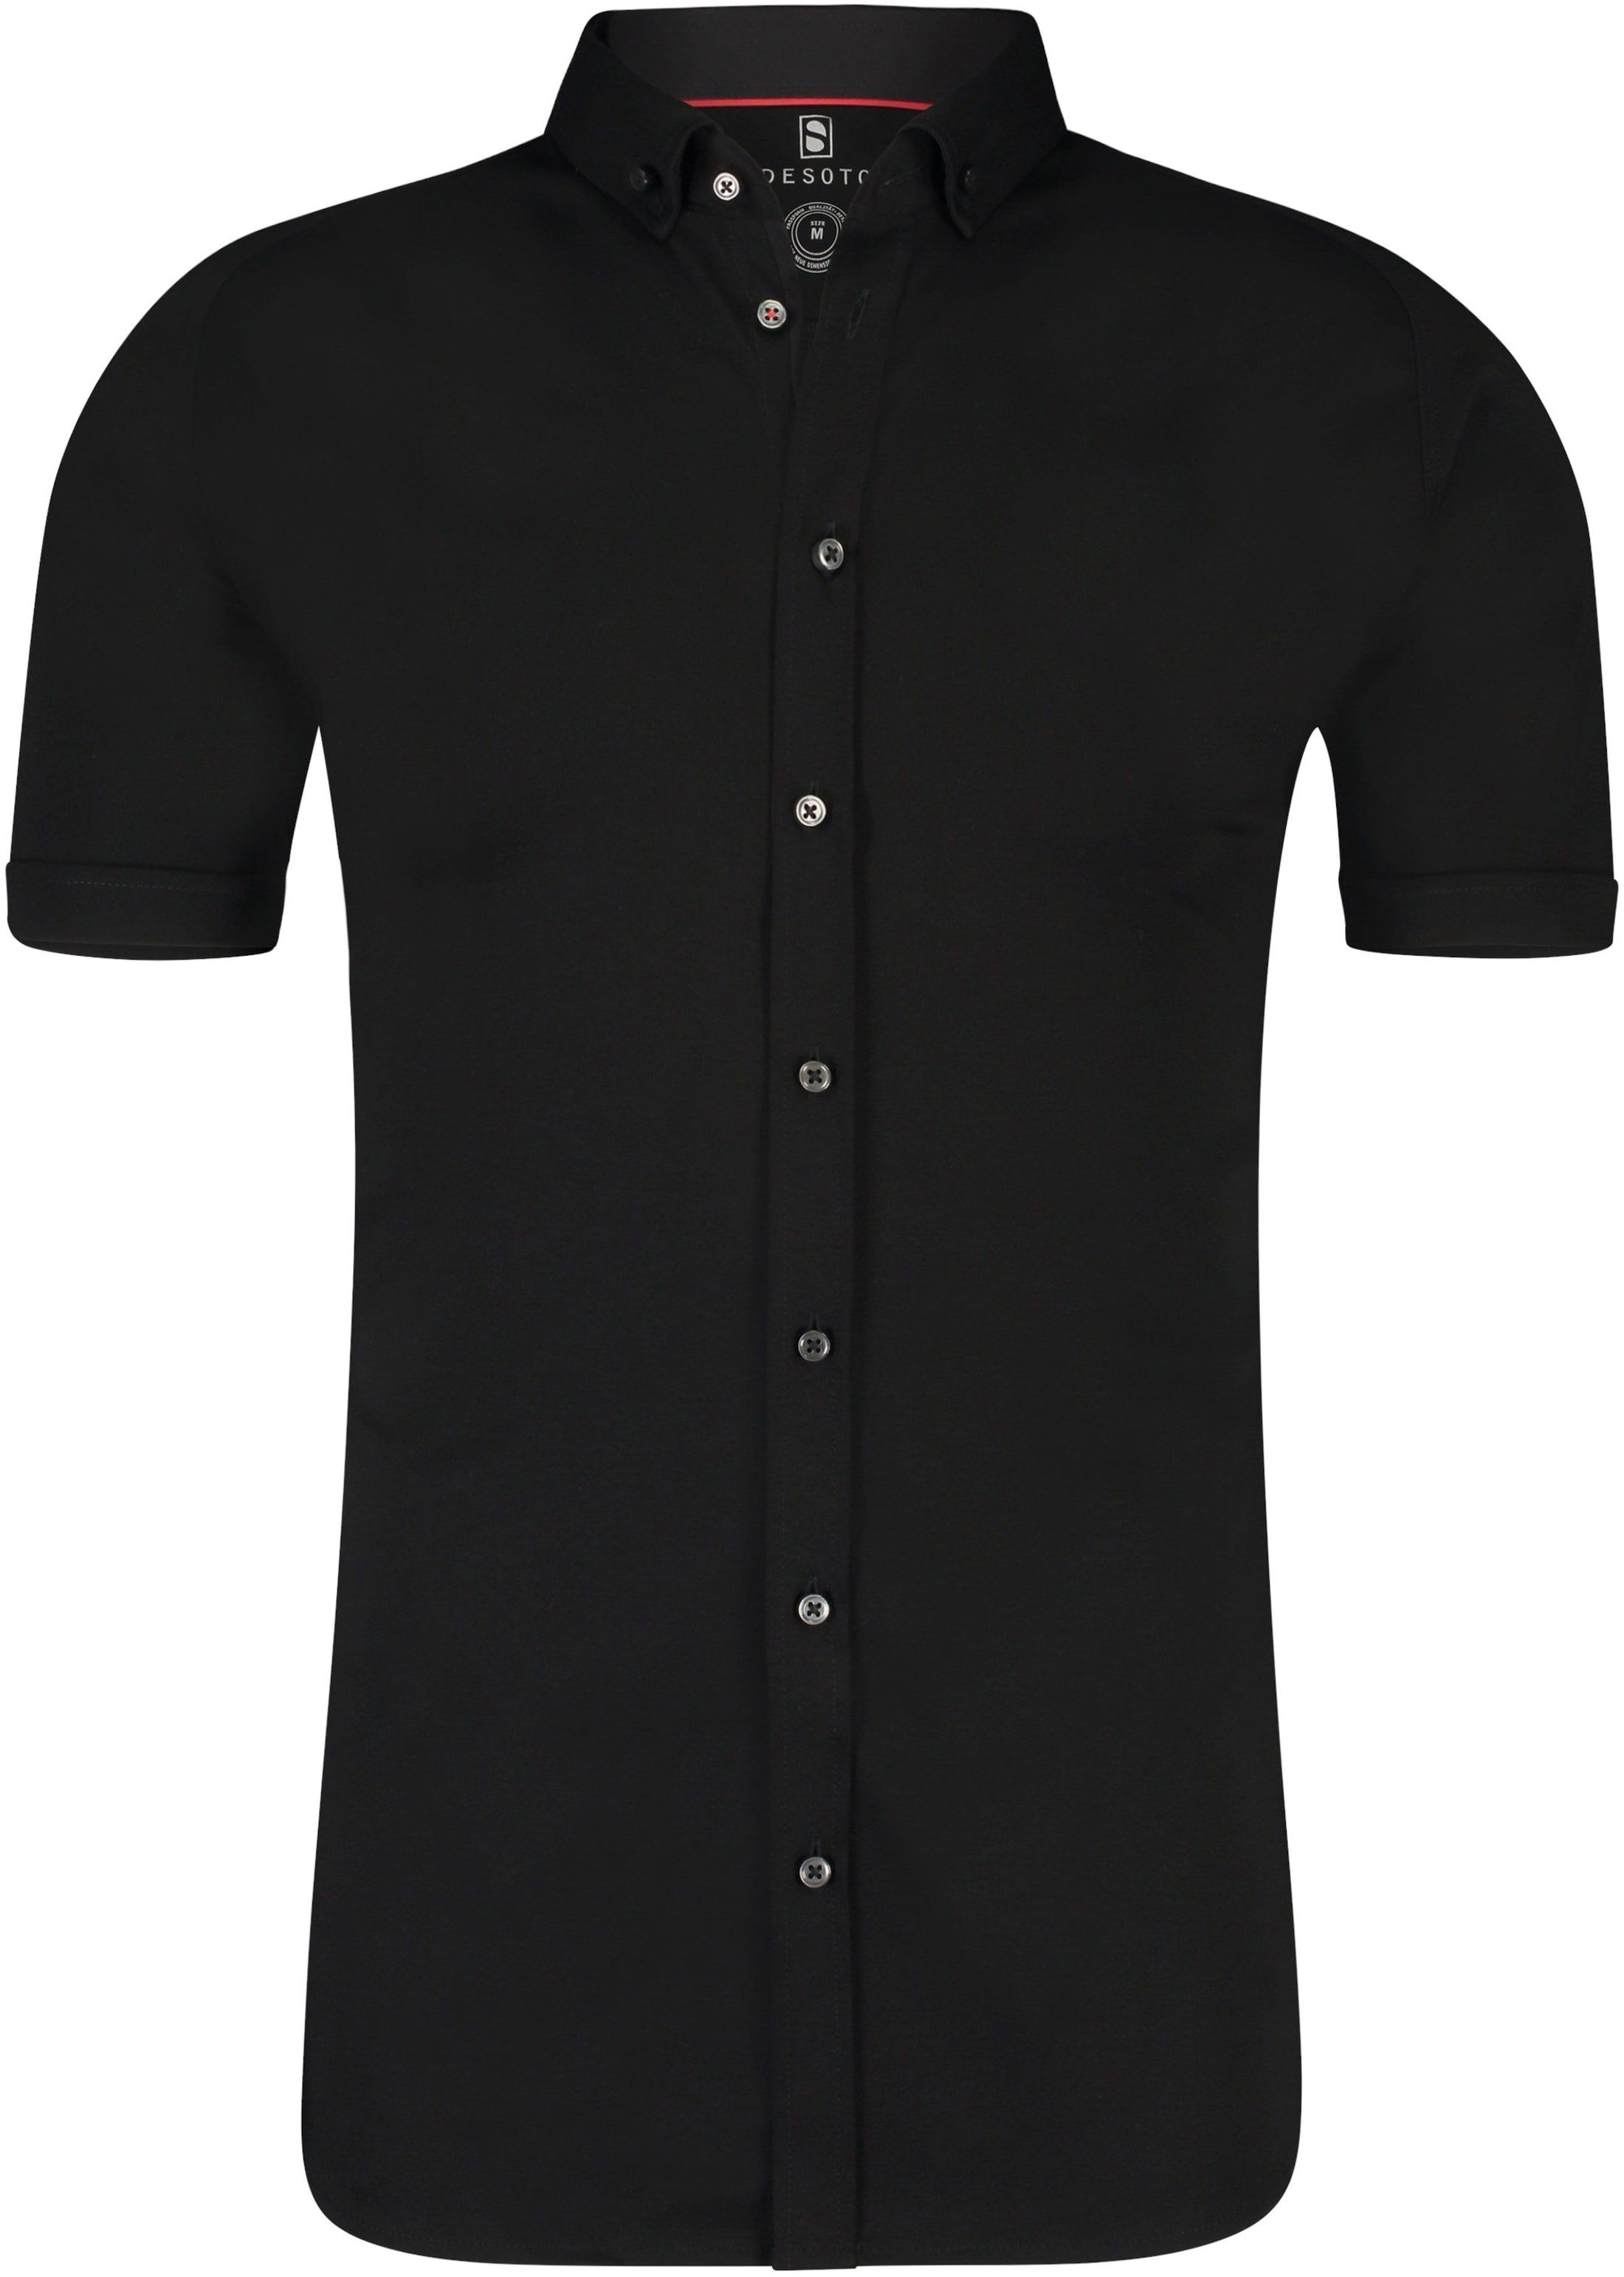 Desoto Shirt Short Sleeve 081 Black size 3XL